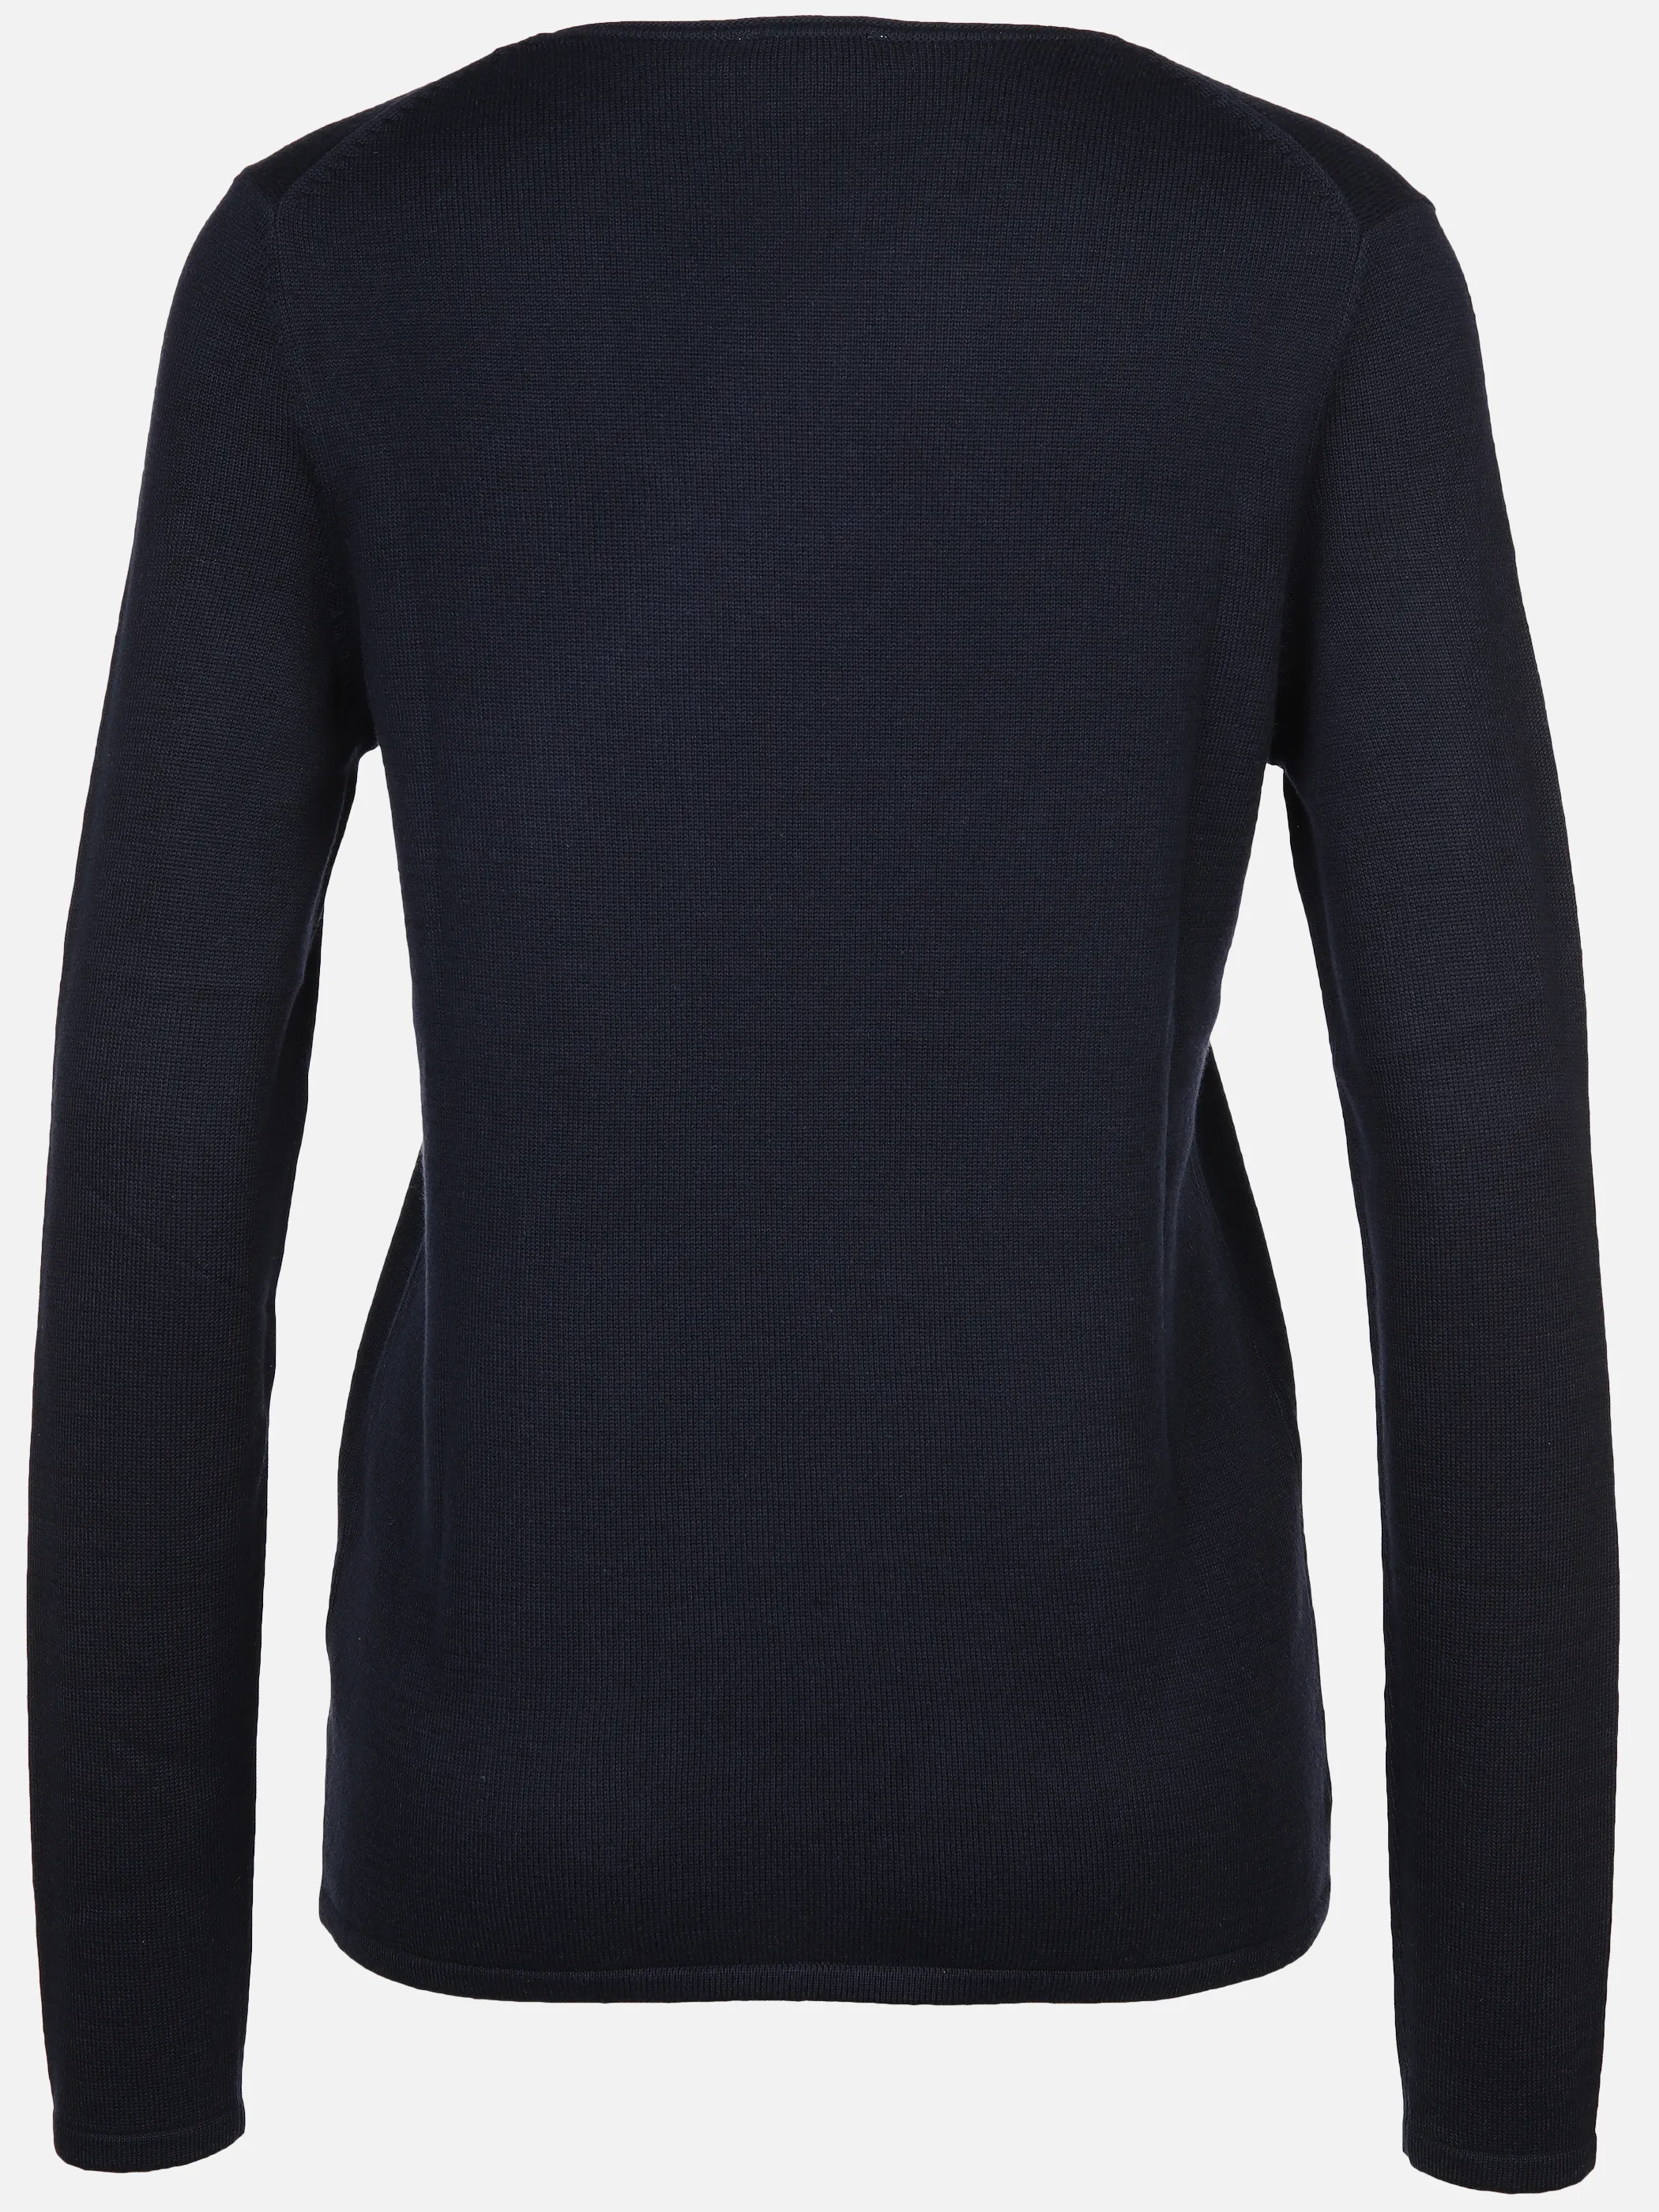 Tom Tailor 1012976 NOS sweater basic v-neck Blau 824304 10360 2